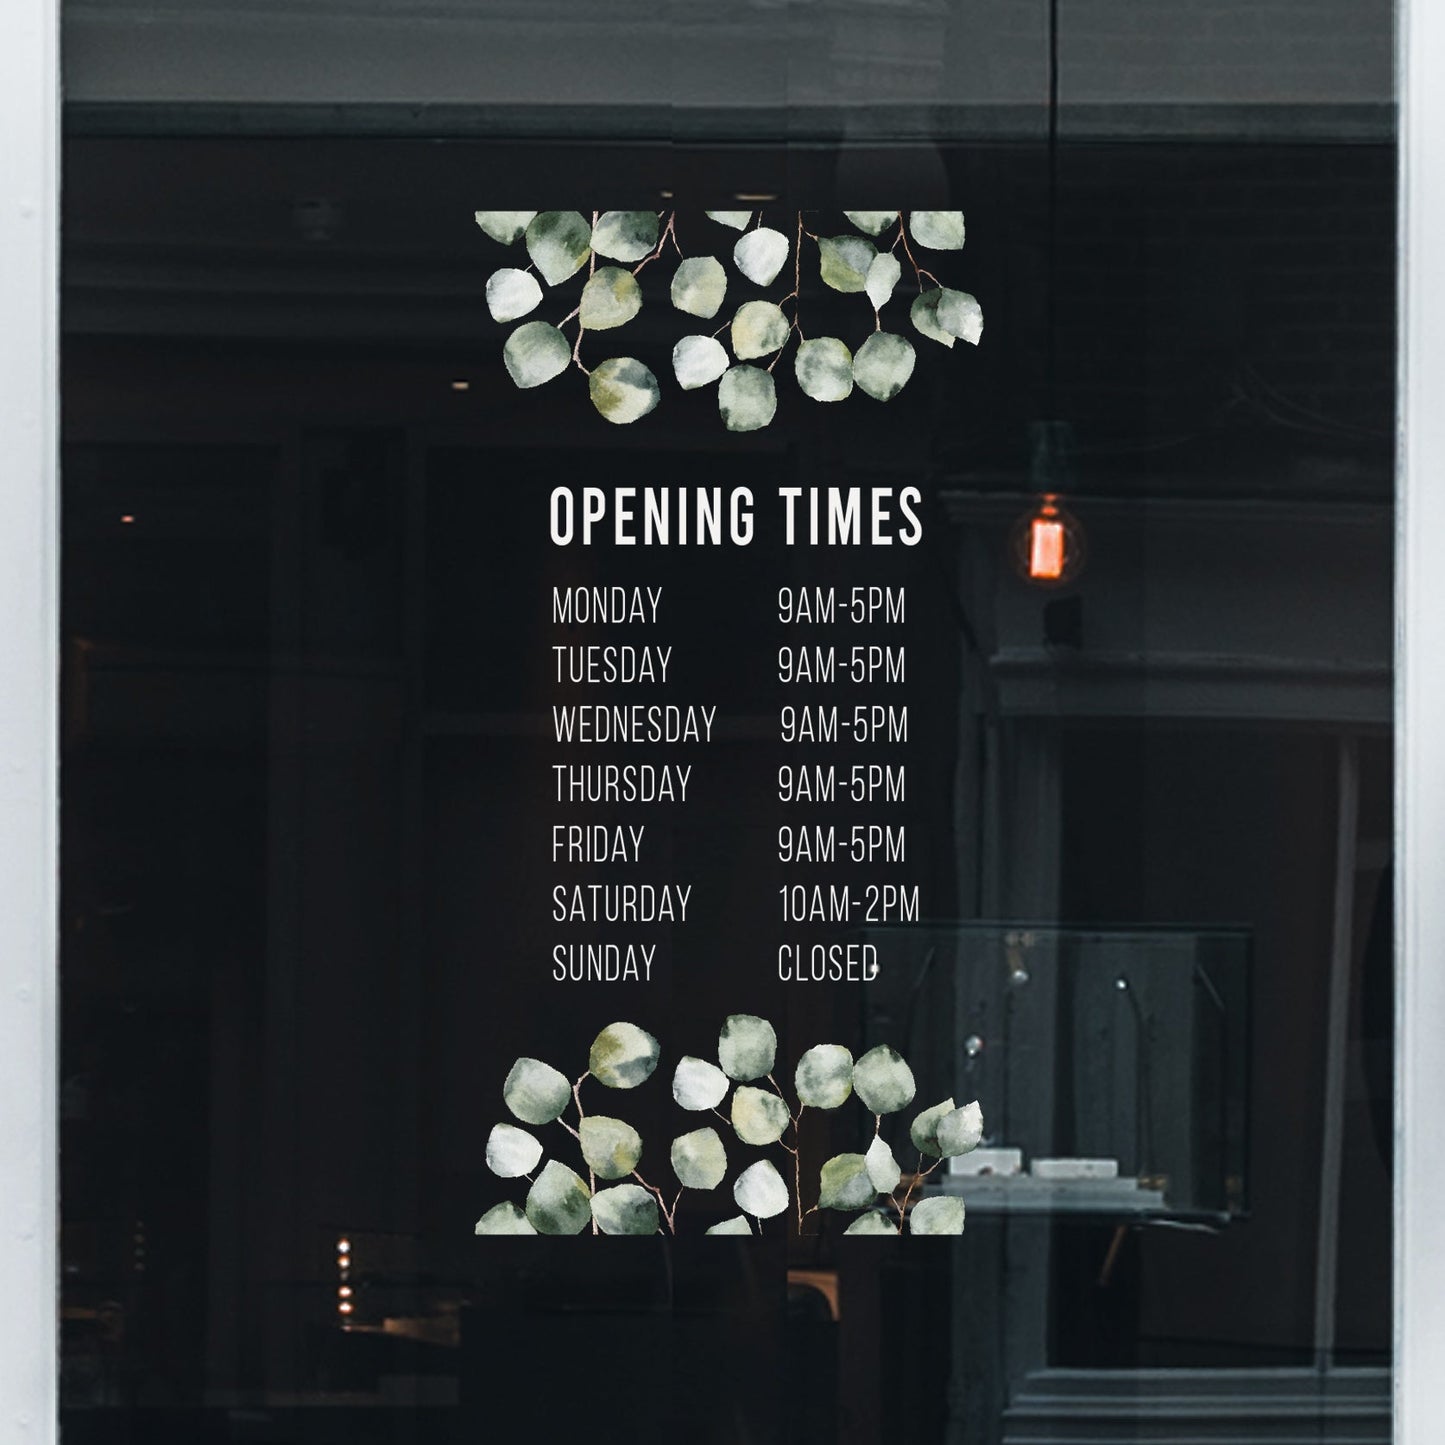 Shop Window Opening Times - Eucalyptus Borders